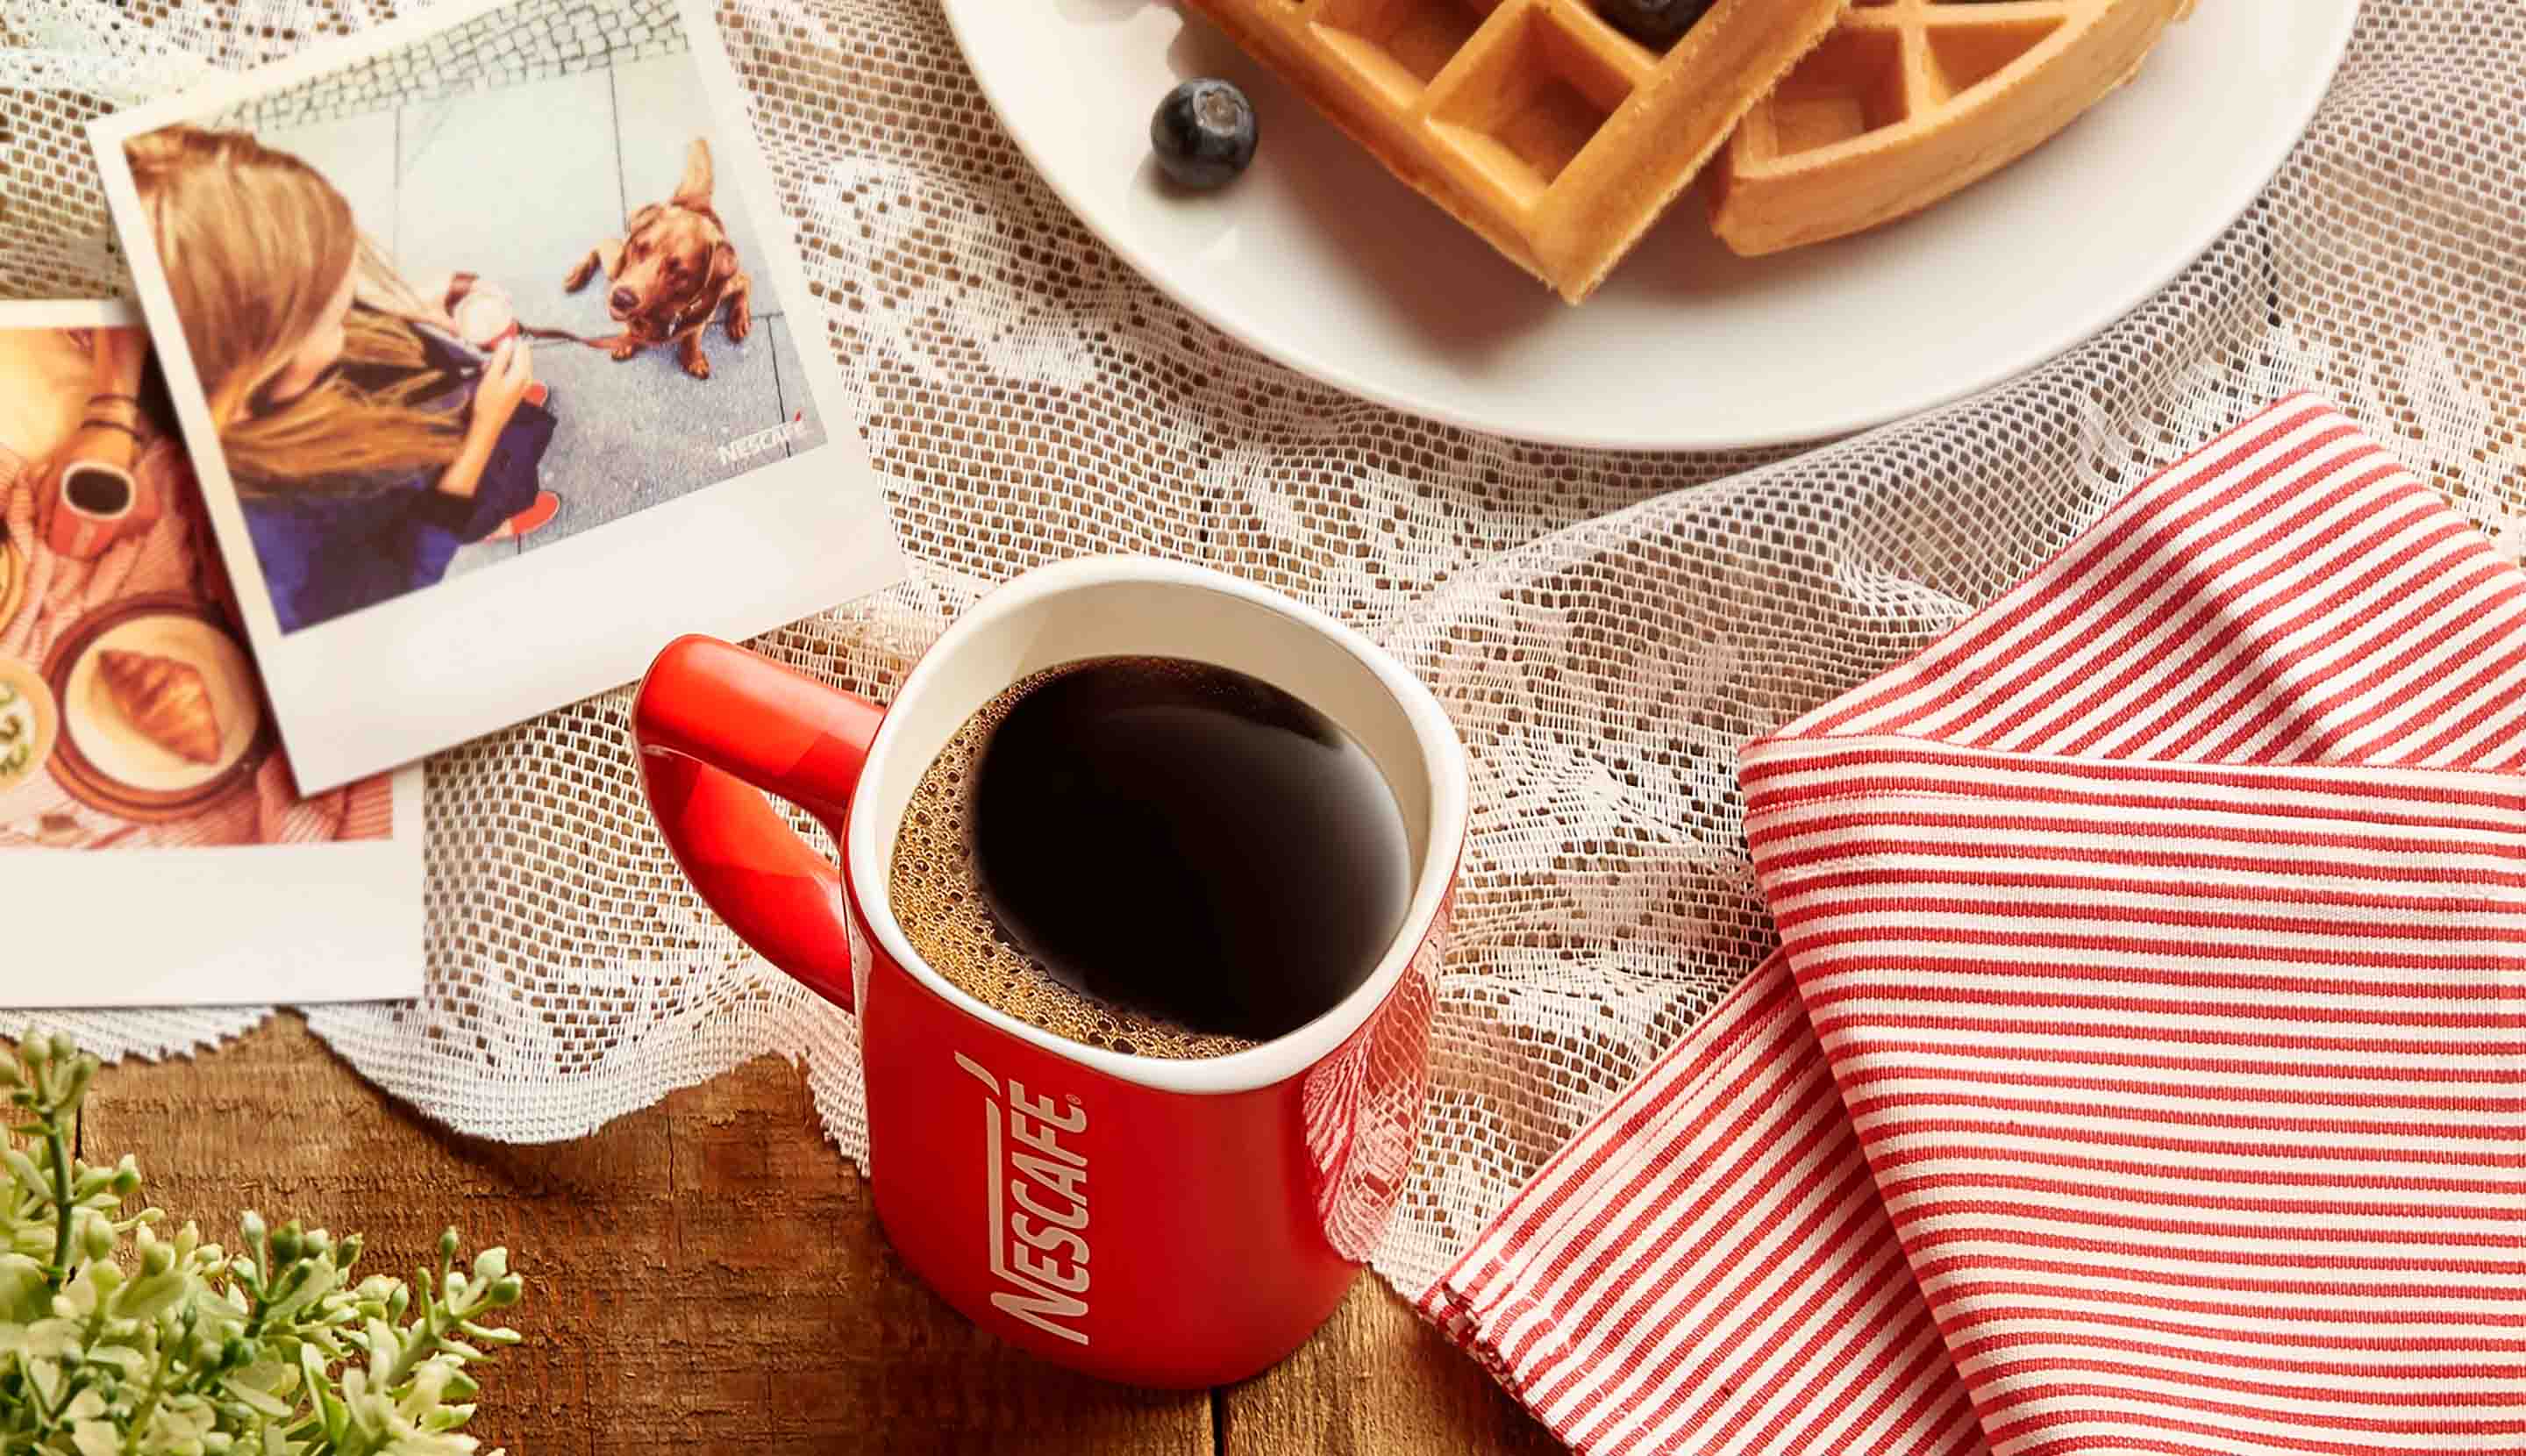 Nescafe classic mug at breakfast